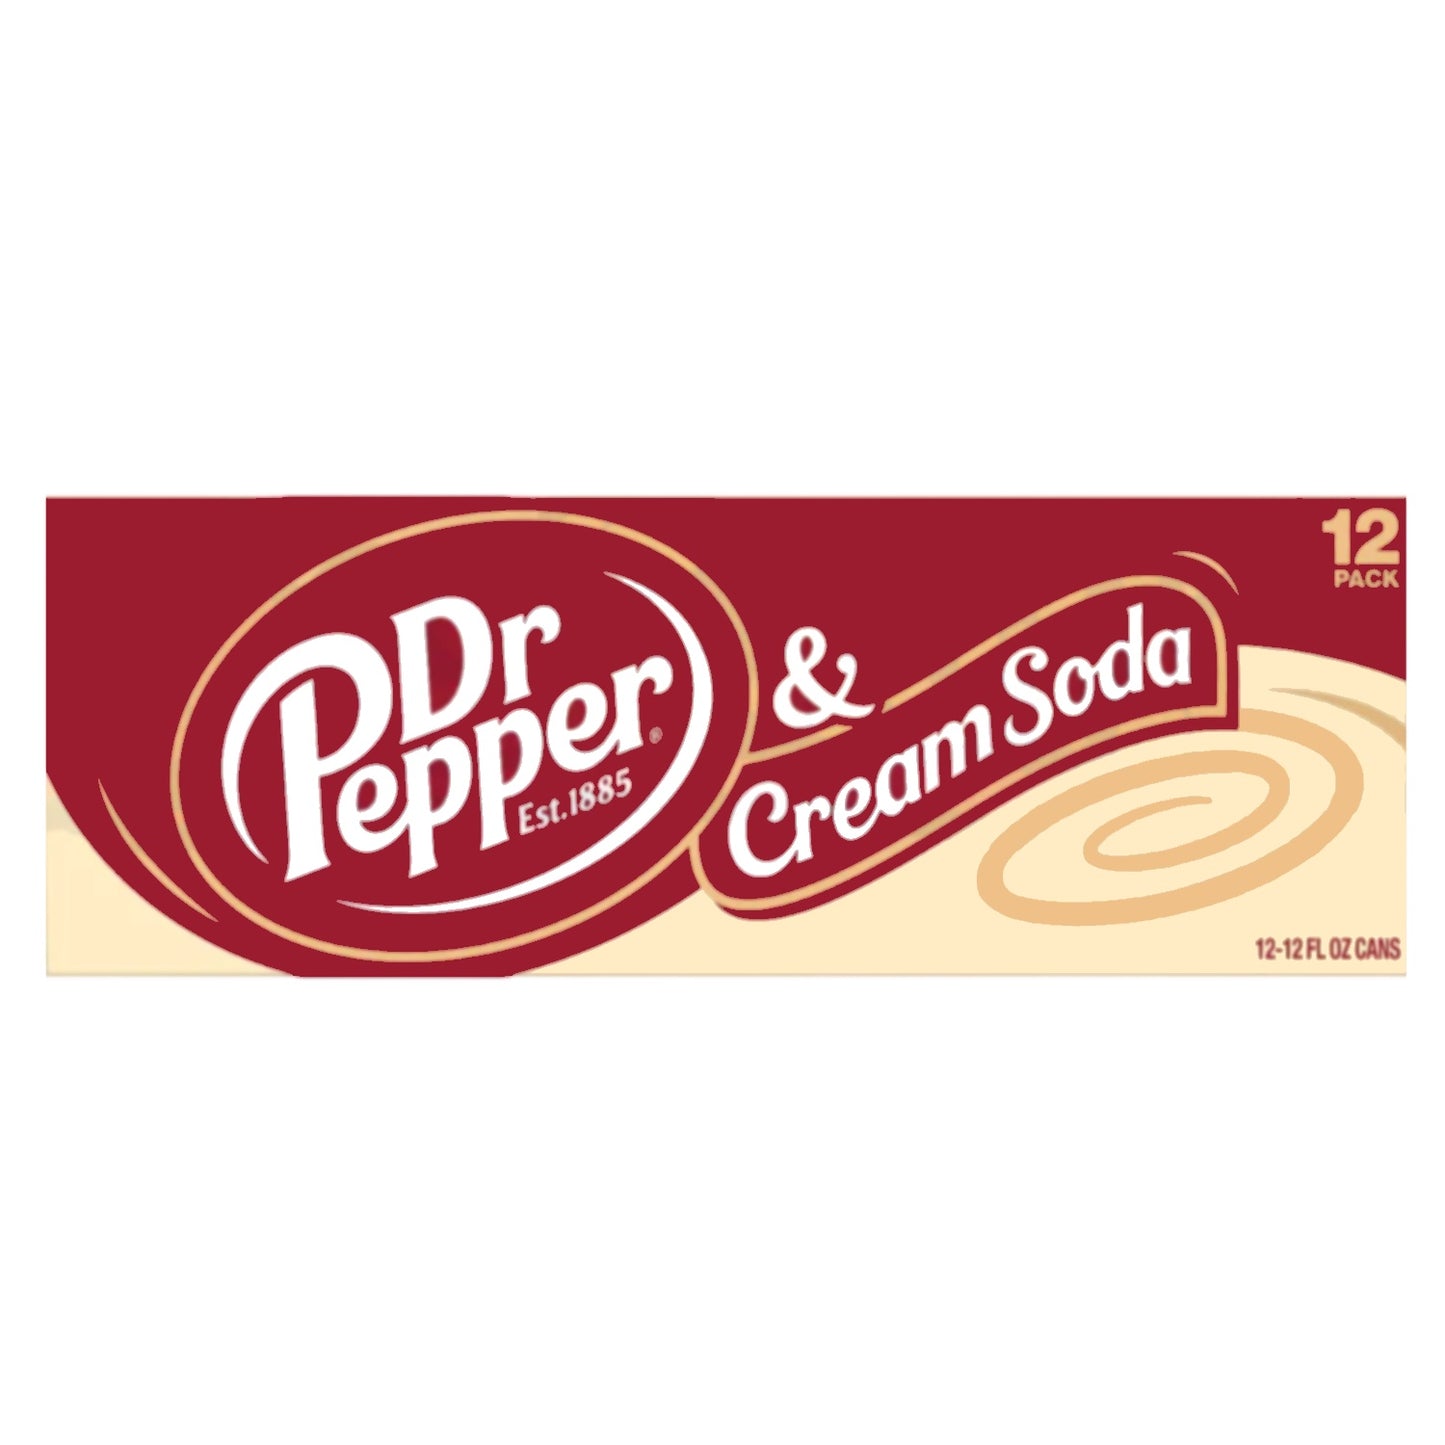 Dr Pepper & Cream Soda Case